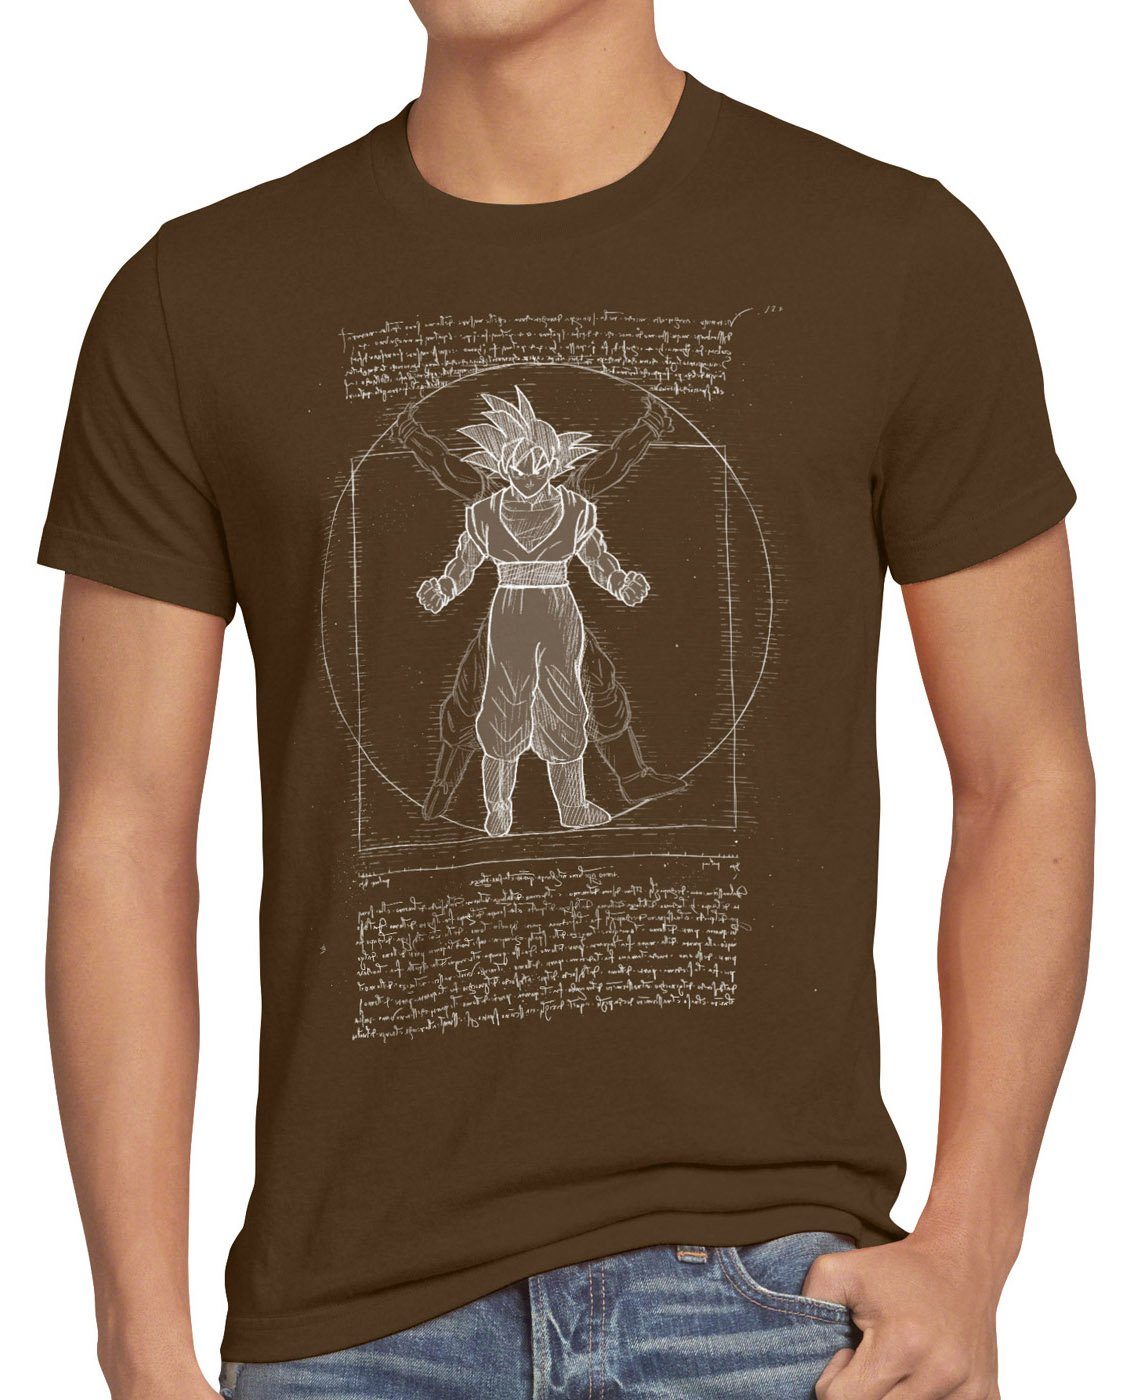 T-Shirt style3 z ball braun da Print-Shirt Vitruvianischer vegeta vinci roshi Herren Son-Goku